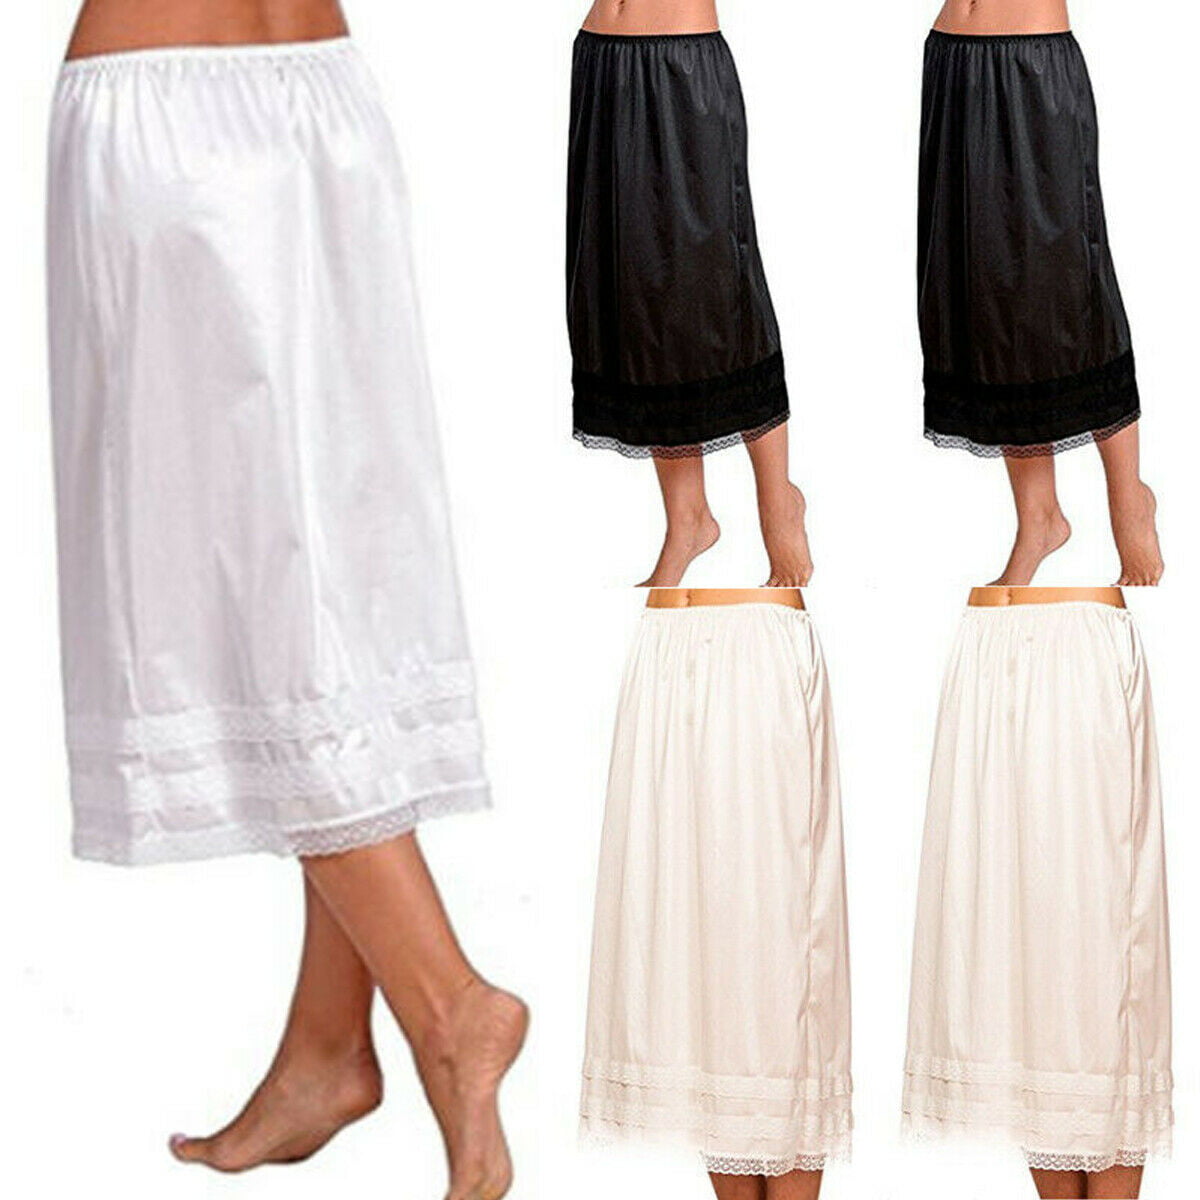 ZJY Half Slip Underdress Women Underskirt See Through Lace Mesh Black Half Slips Shapewear Half Slip Underskirt Color : Black, Size : One Size